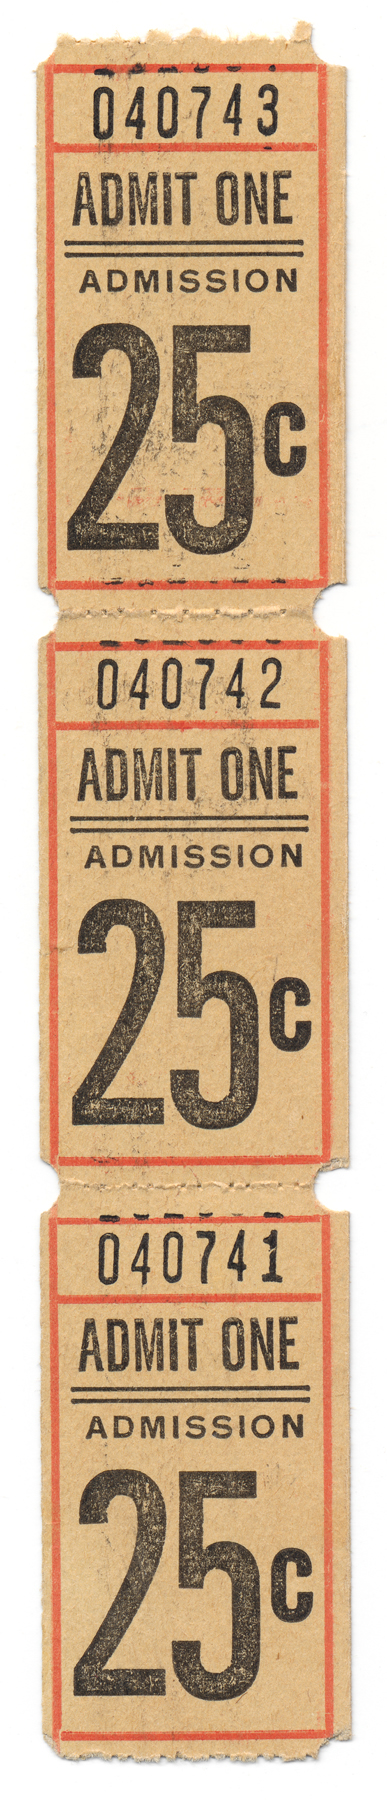 Vintage Admit One Ticket x3, Raymond, Series, Scrapbooking, Scrapbook, HQ Photo